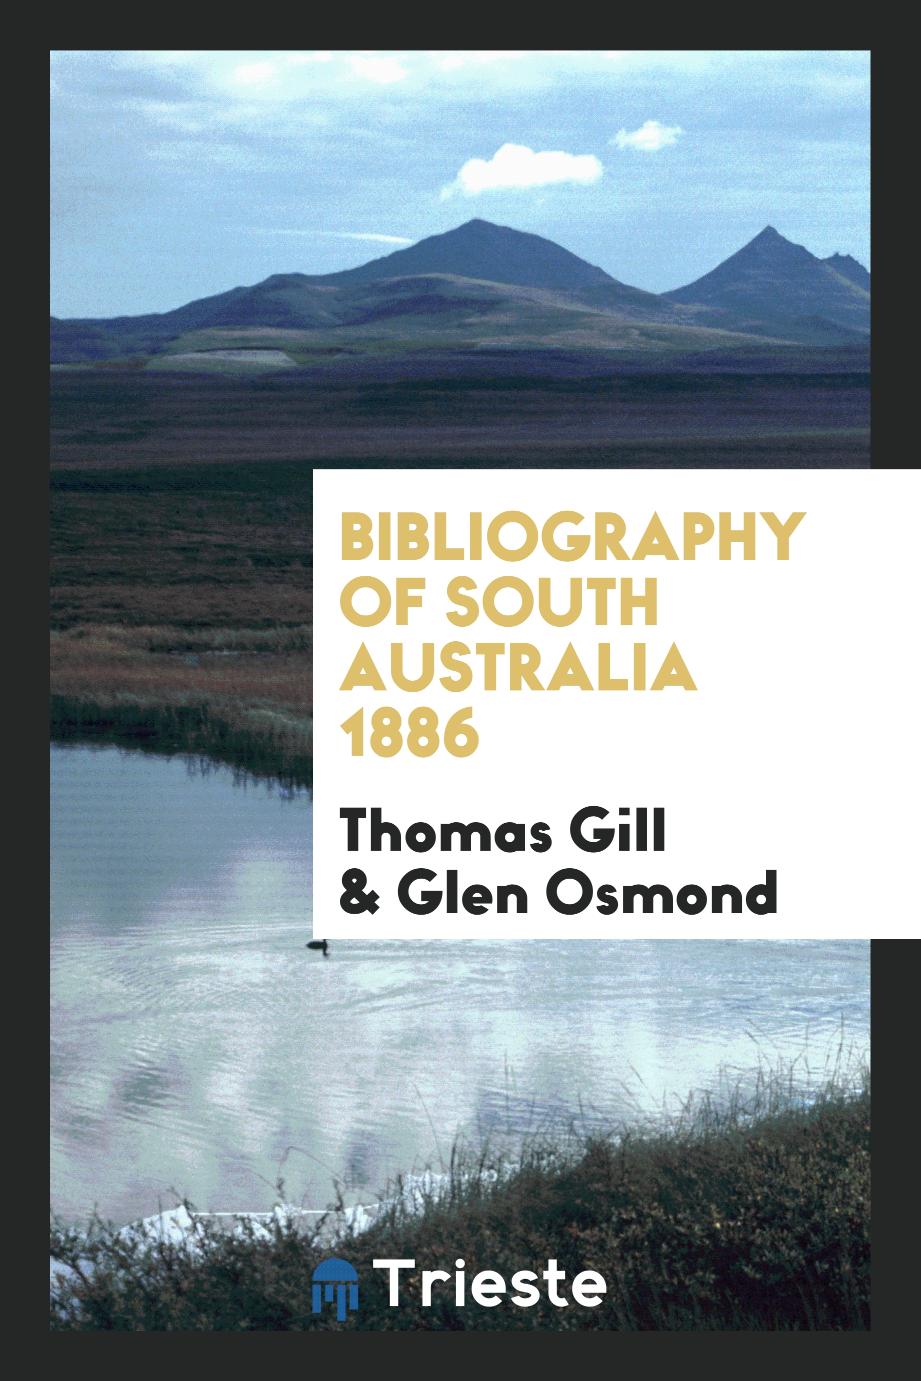 Thomas Gill, Glen Osmond - Bibliography of South Australia 1886